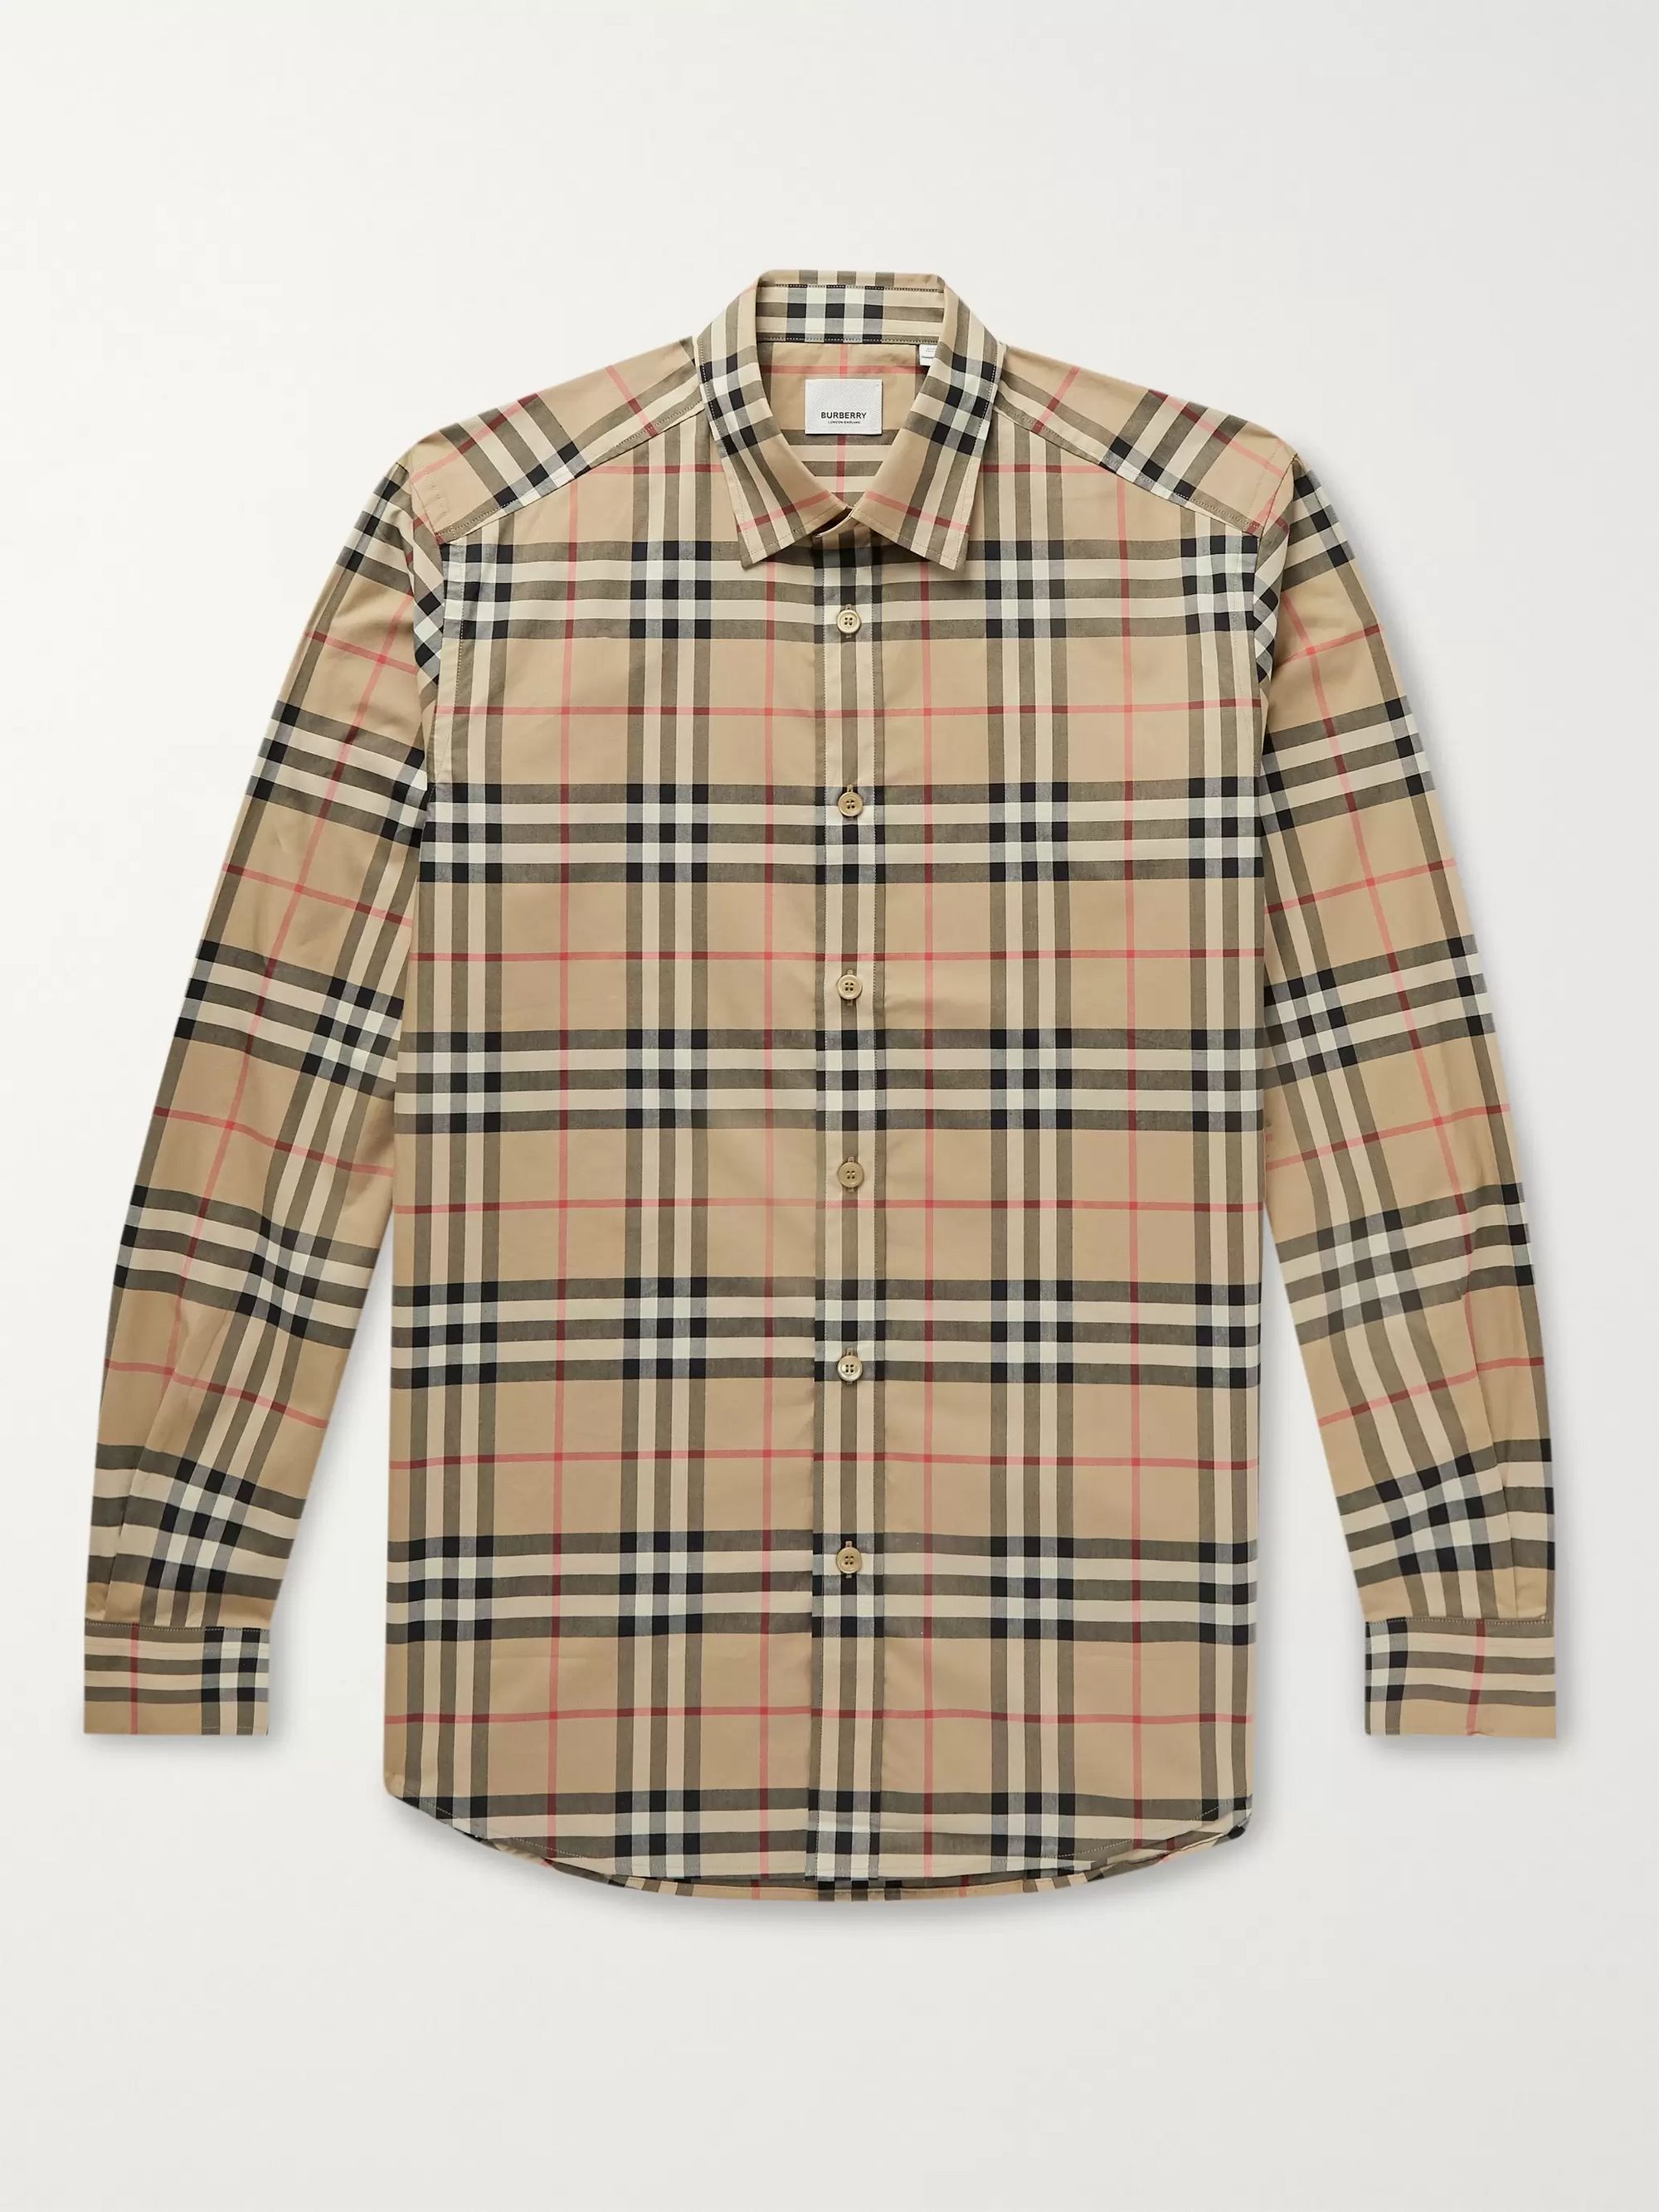 burberry check shirt sale